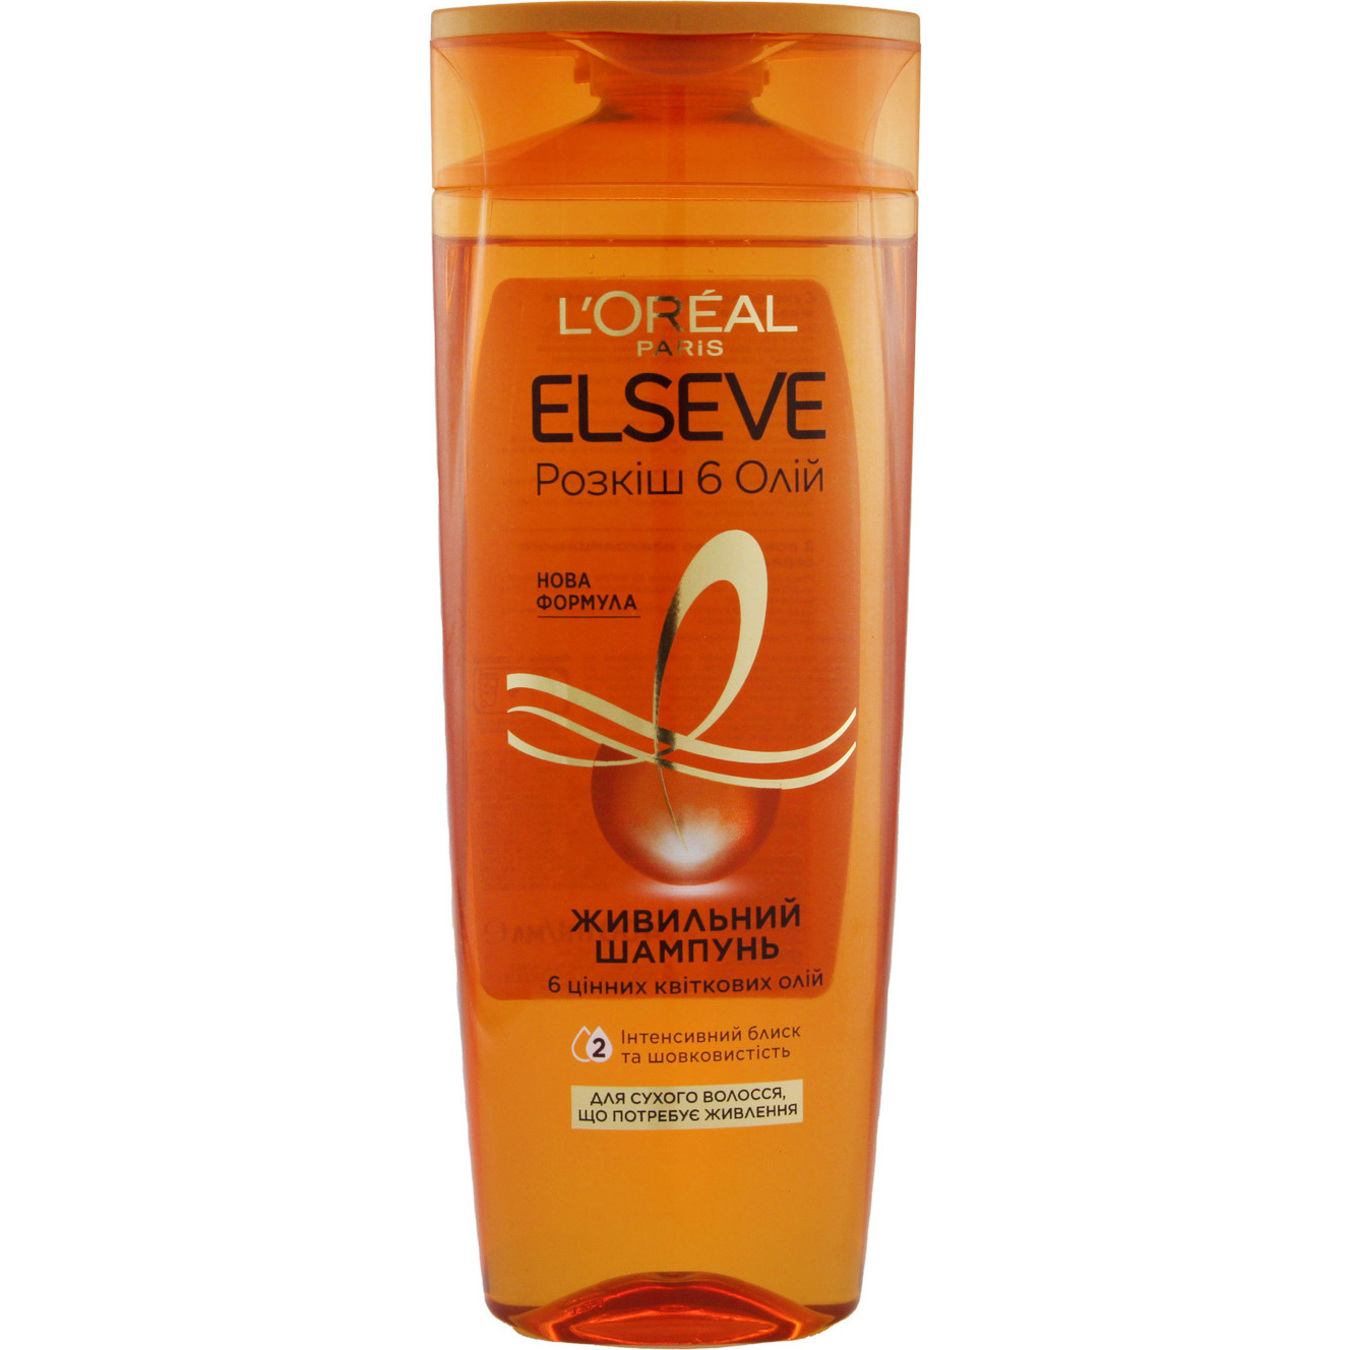 L'Oreal Paris Elseve Shampoo Luxury 6 oils nourishing oils for all hair types 400ml